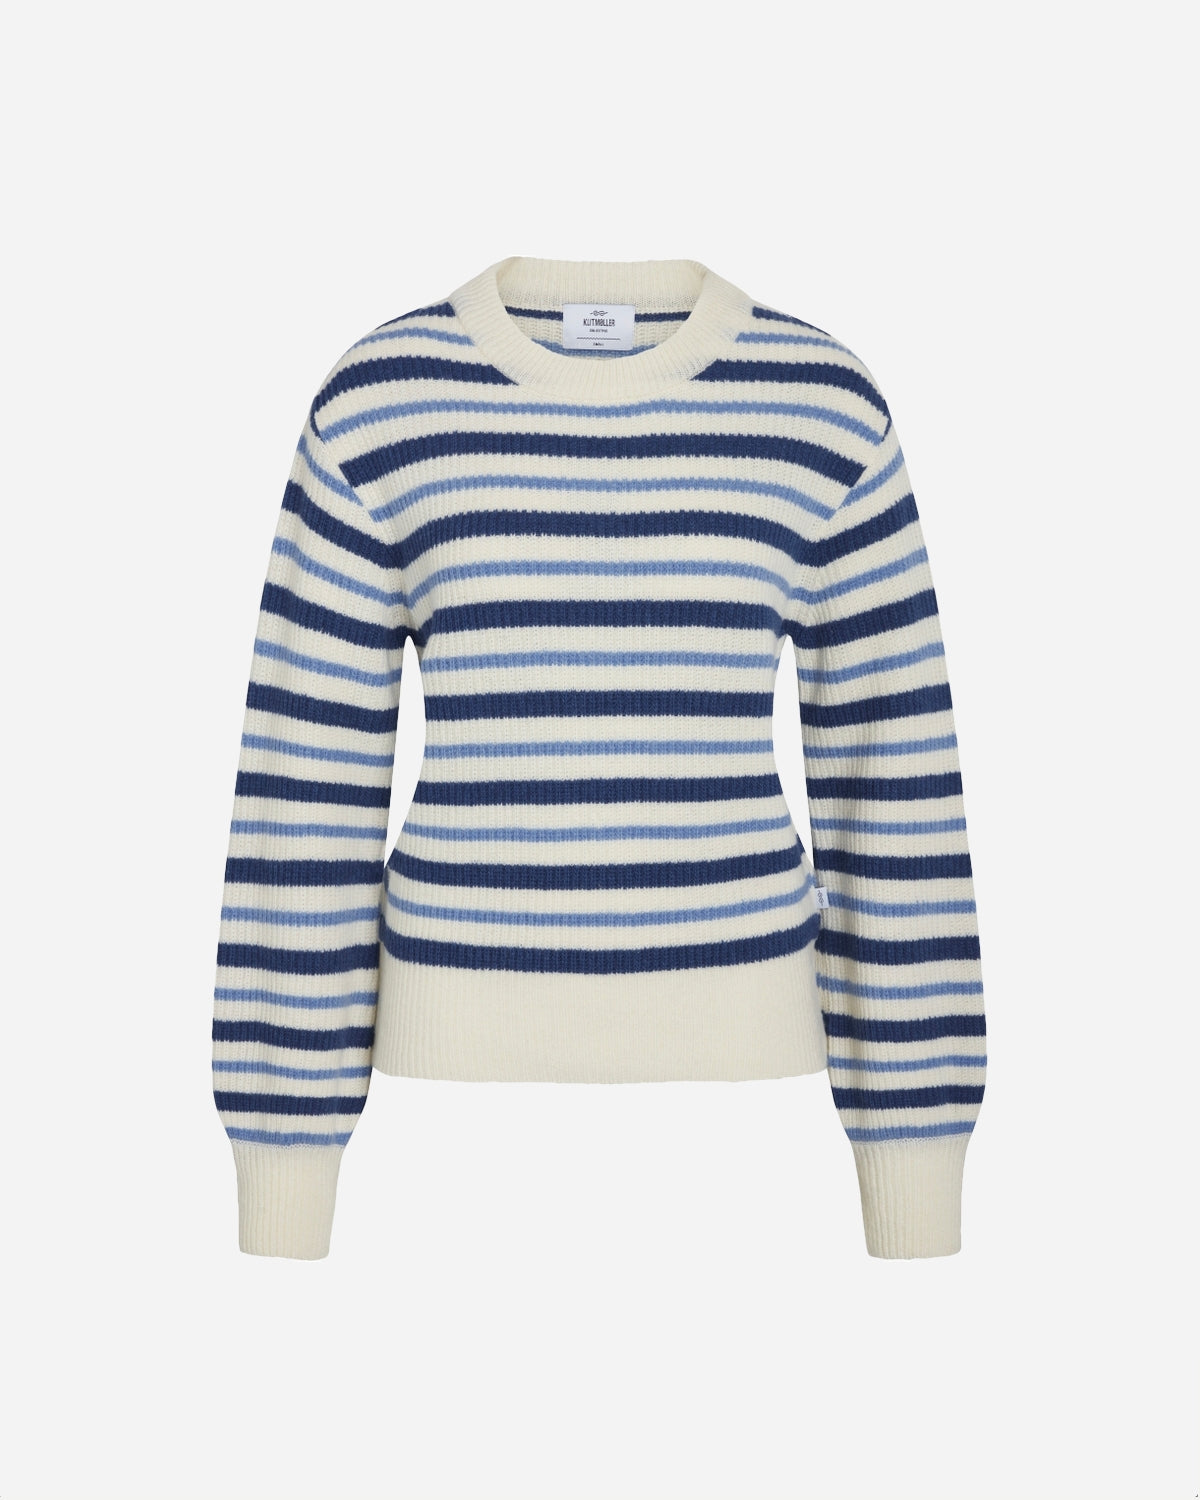 Melli knit - Ocean/cream/light blue